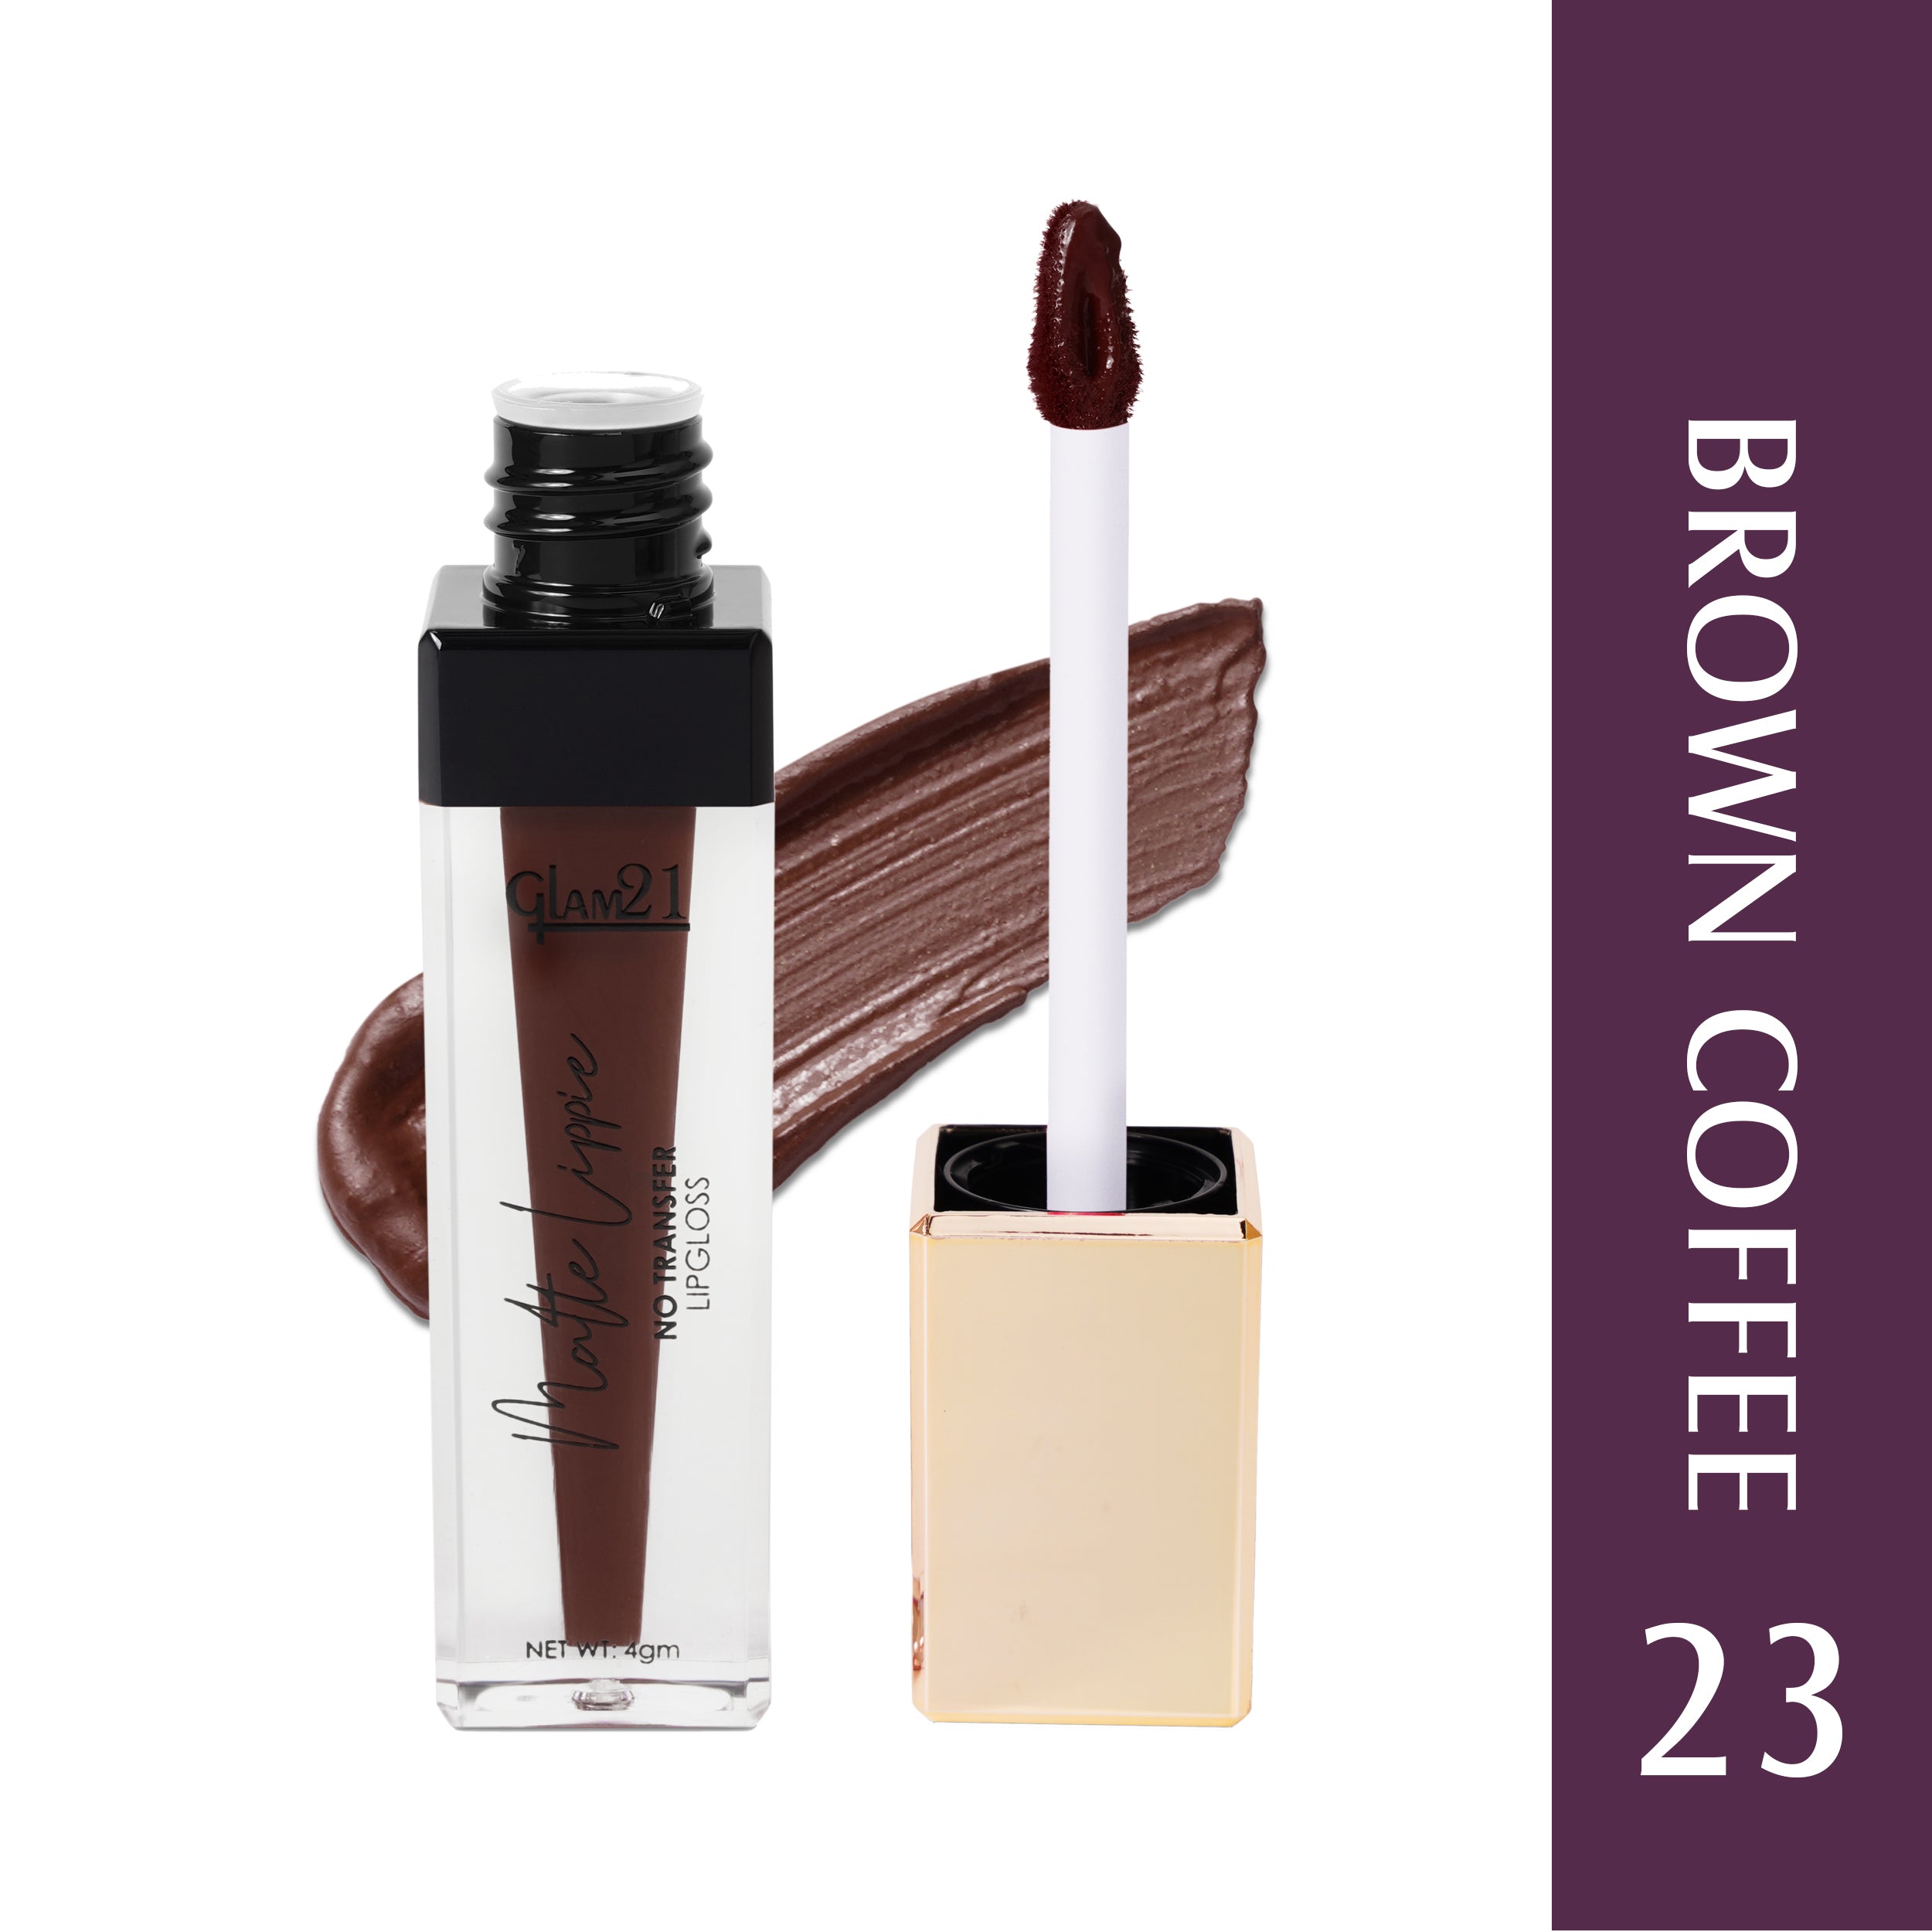 Glam21 Matte Lippie No Transfer Lip Gloss Lightweight Comfortable Creamy Formula (4 g, Brown Coffee)